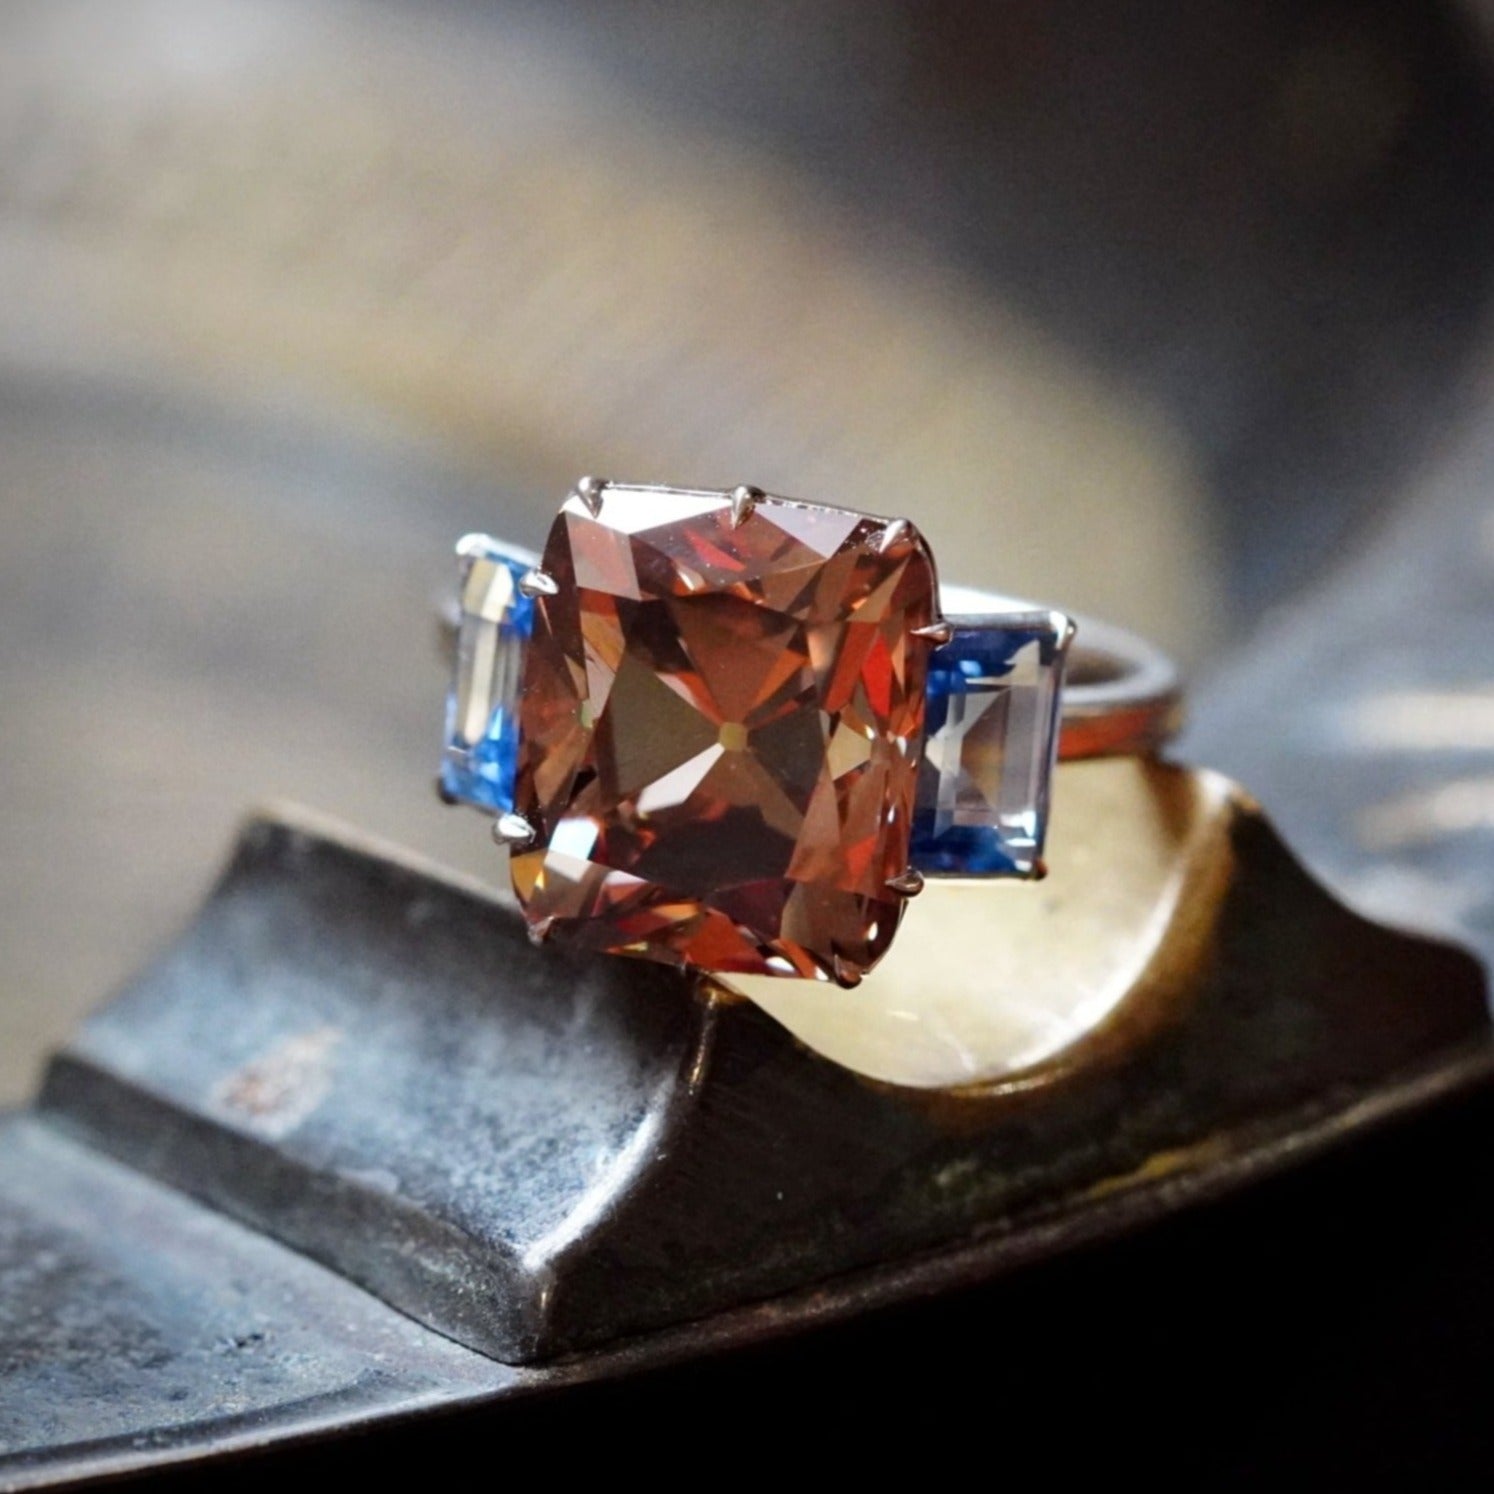 8.66-CT Peruzzi Cut Diamond and Kashmir Sapphire Ring in 18K White Gold